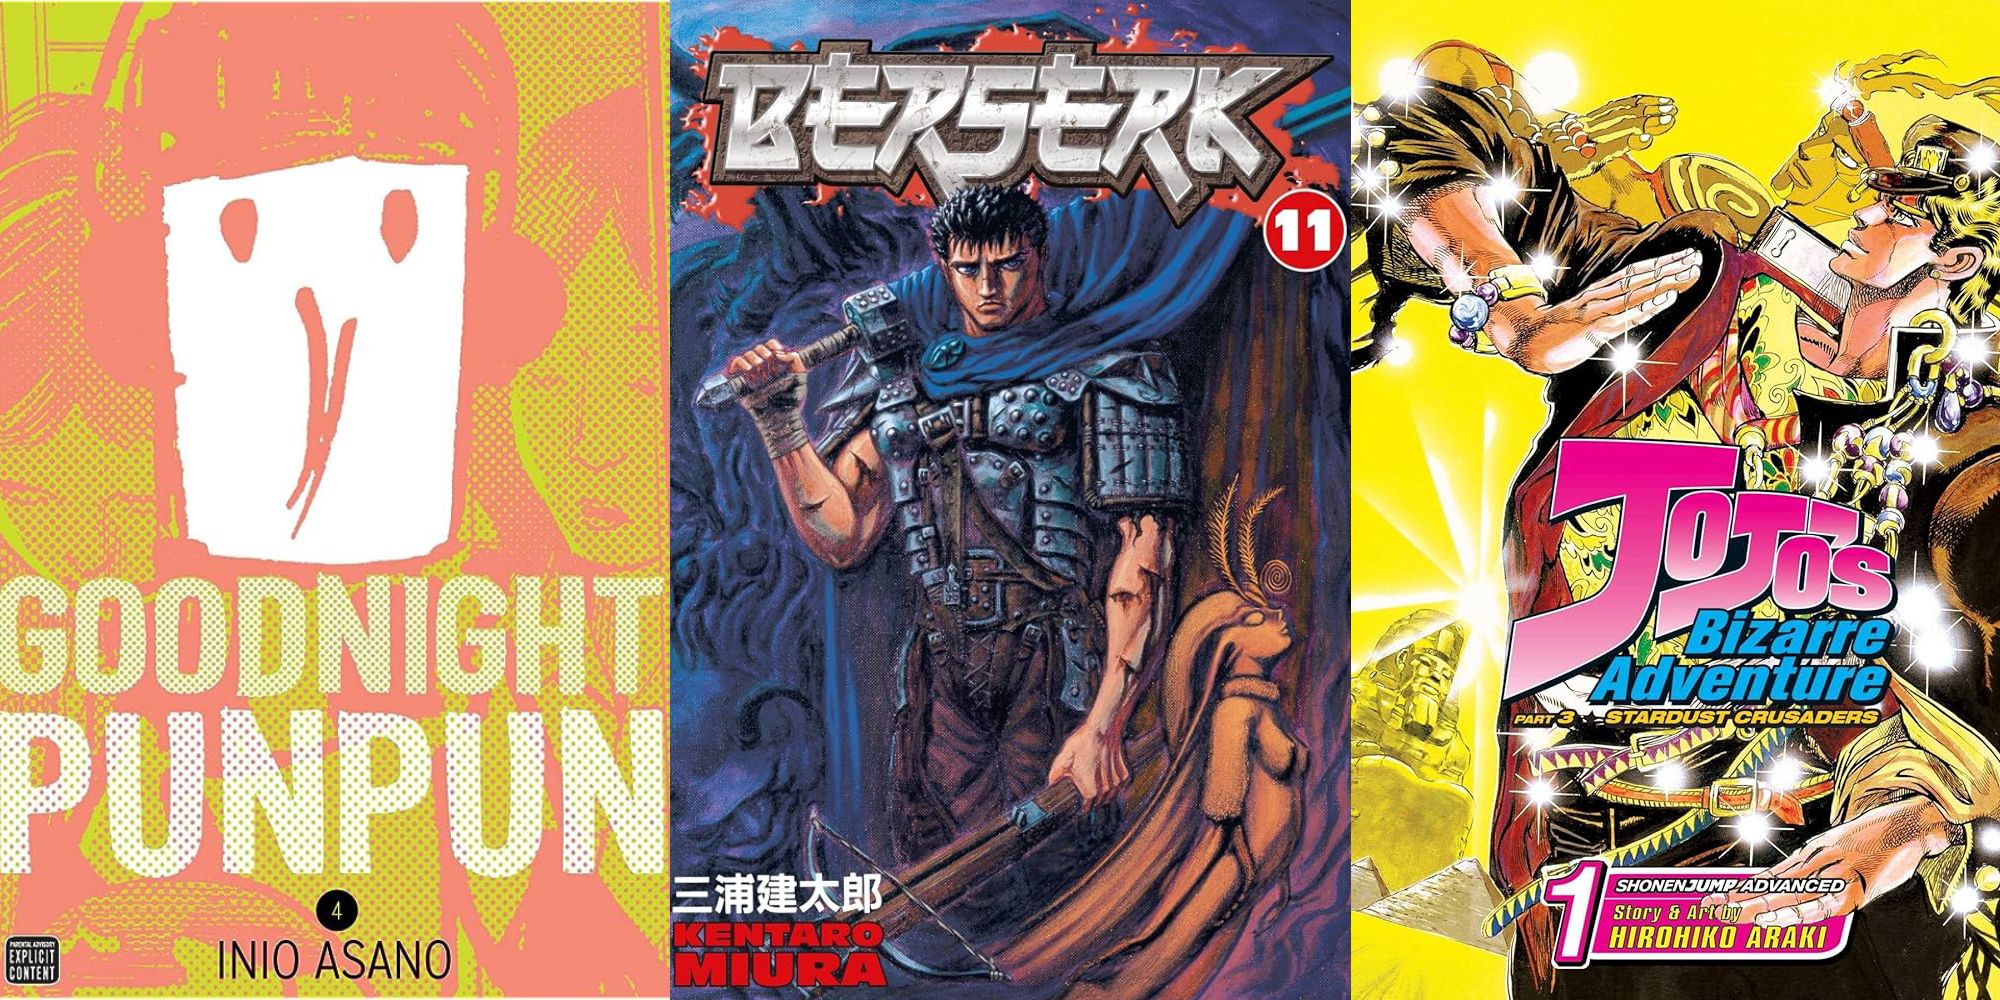 X Manga With Unconventional Art Styles That Are Great split image Goodnight Punpun, Berserk, JoJo's Bizarre Adventures manga covers.